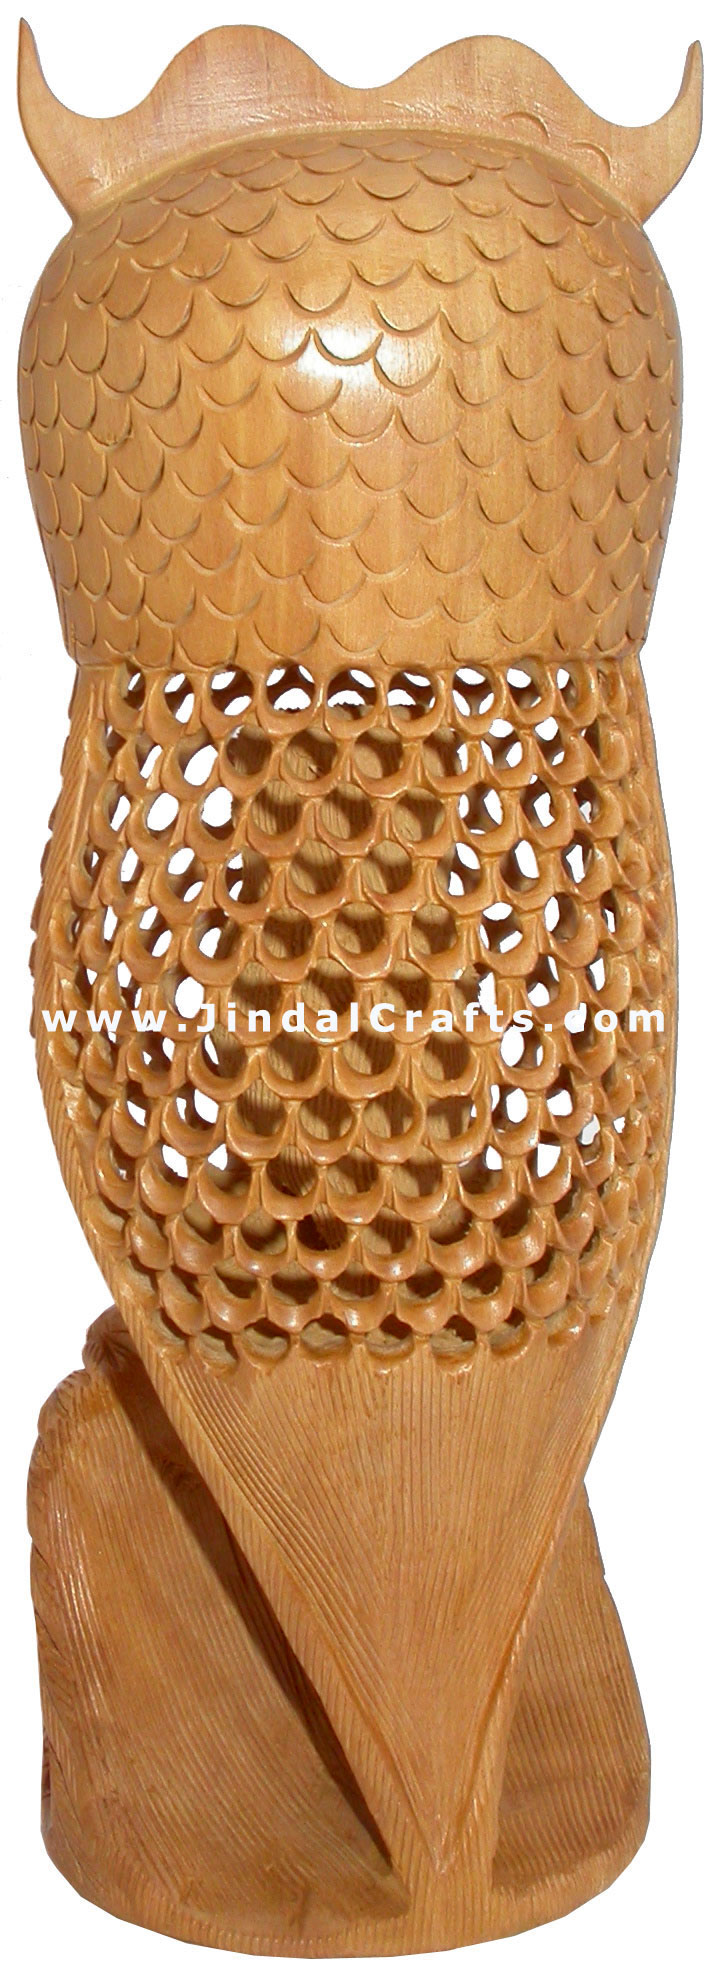 Handmade Wood Sculpture Hollow Owl Indian Carving Craft Jalli Engraving Figures